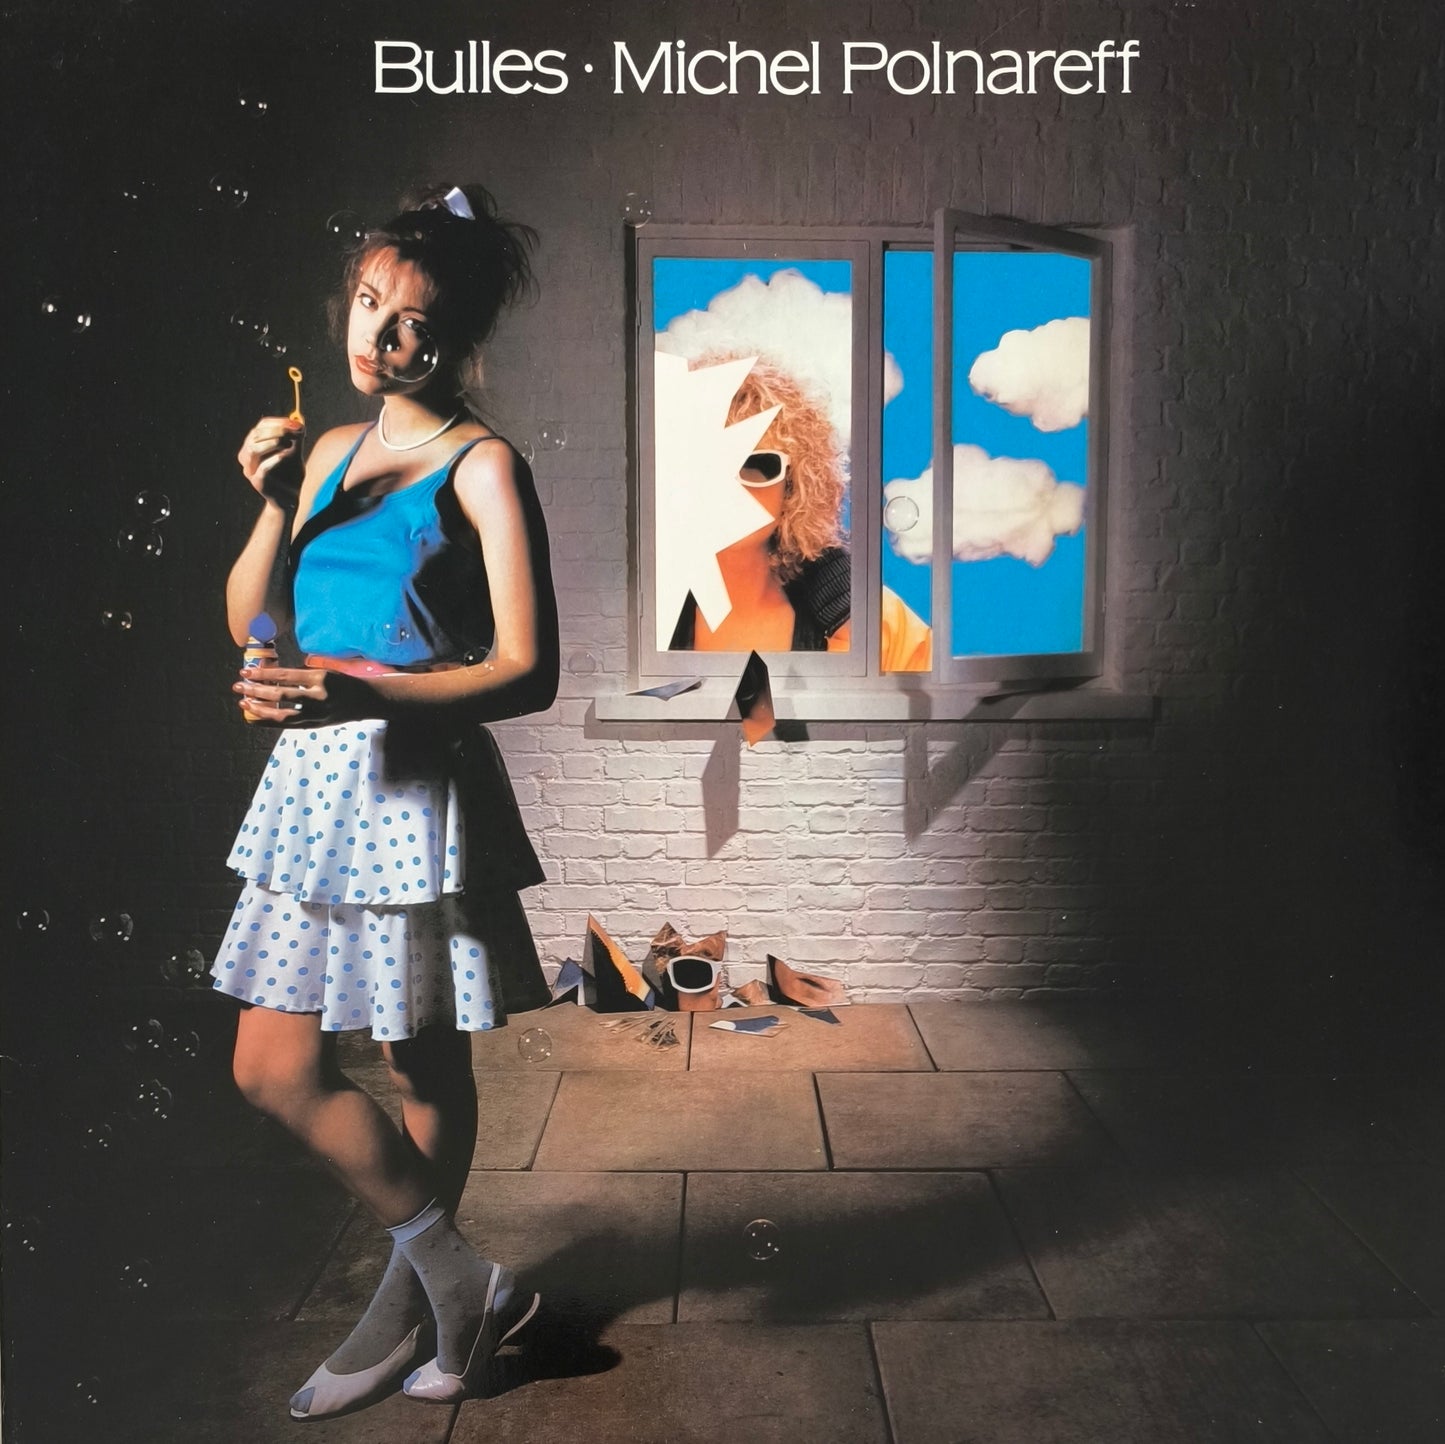 MICHEL POLNAREFF - Bulles